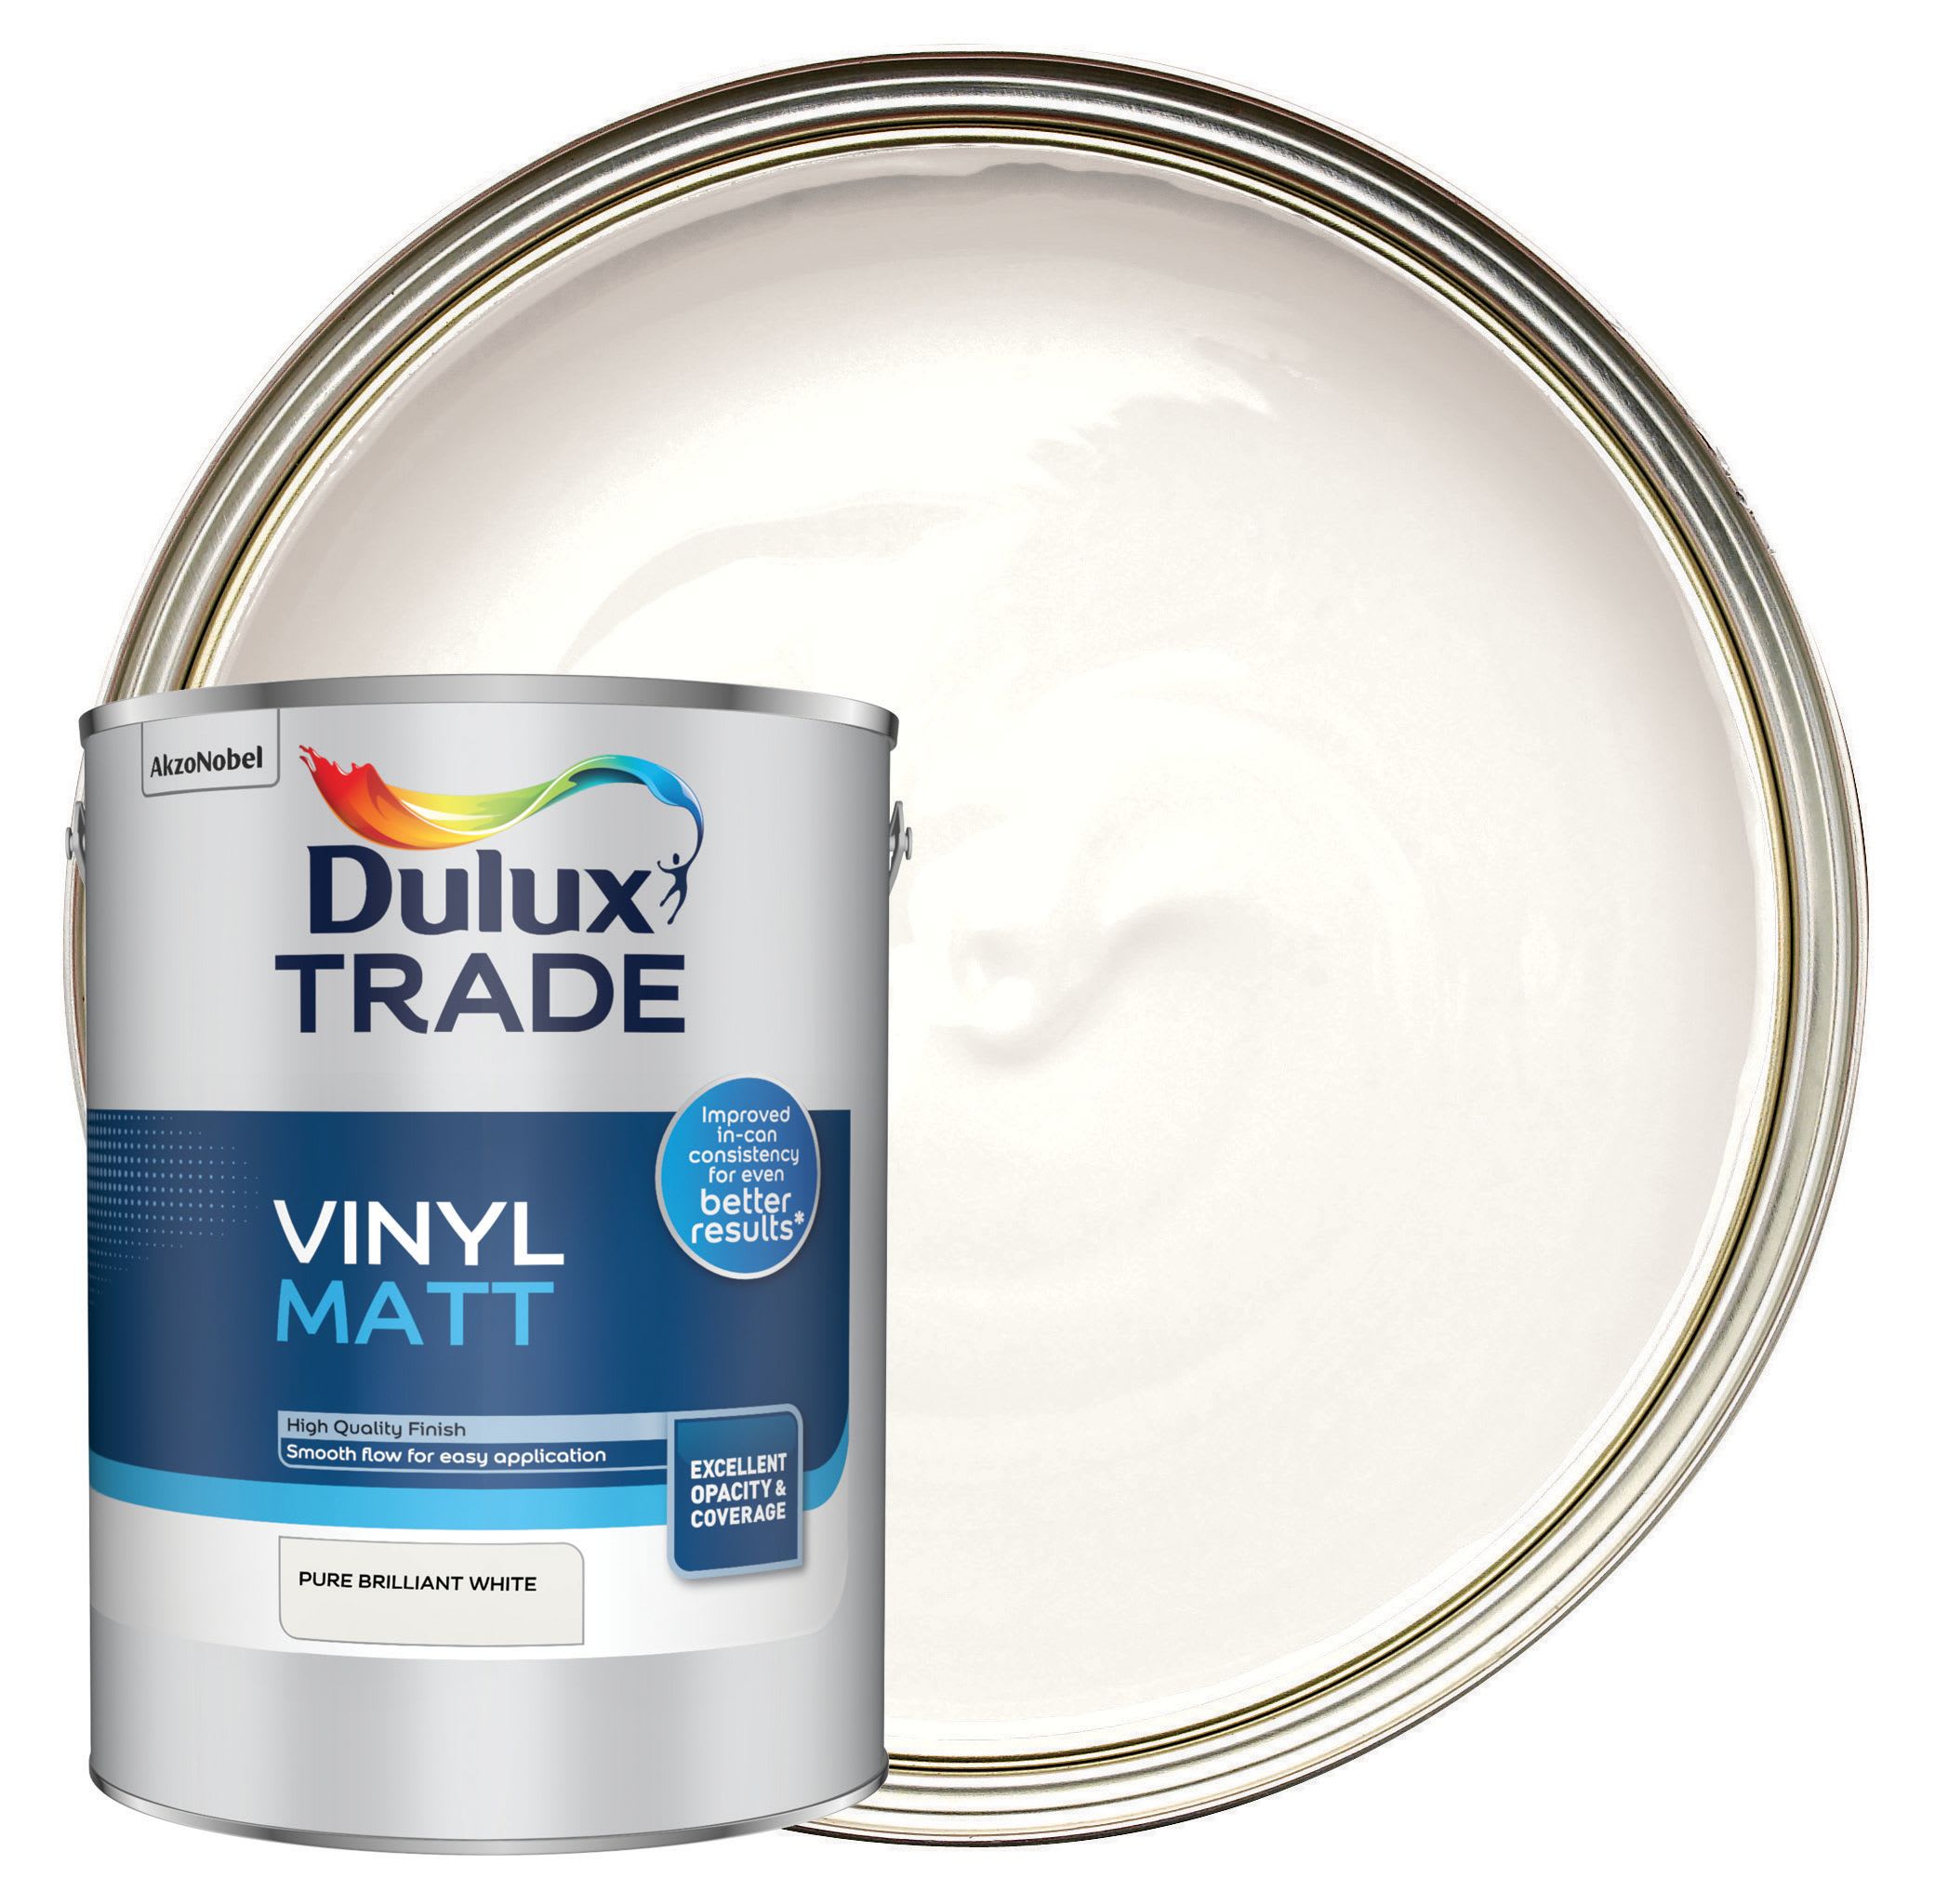 Dulux Trade Vinyl Matt Emulsion Paint - Pure